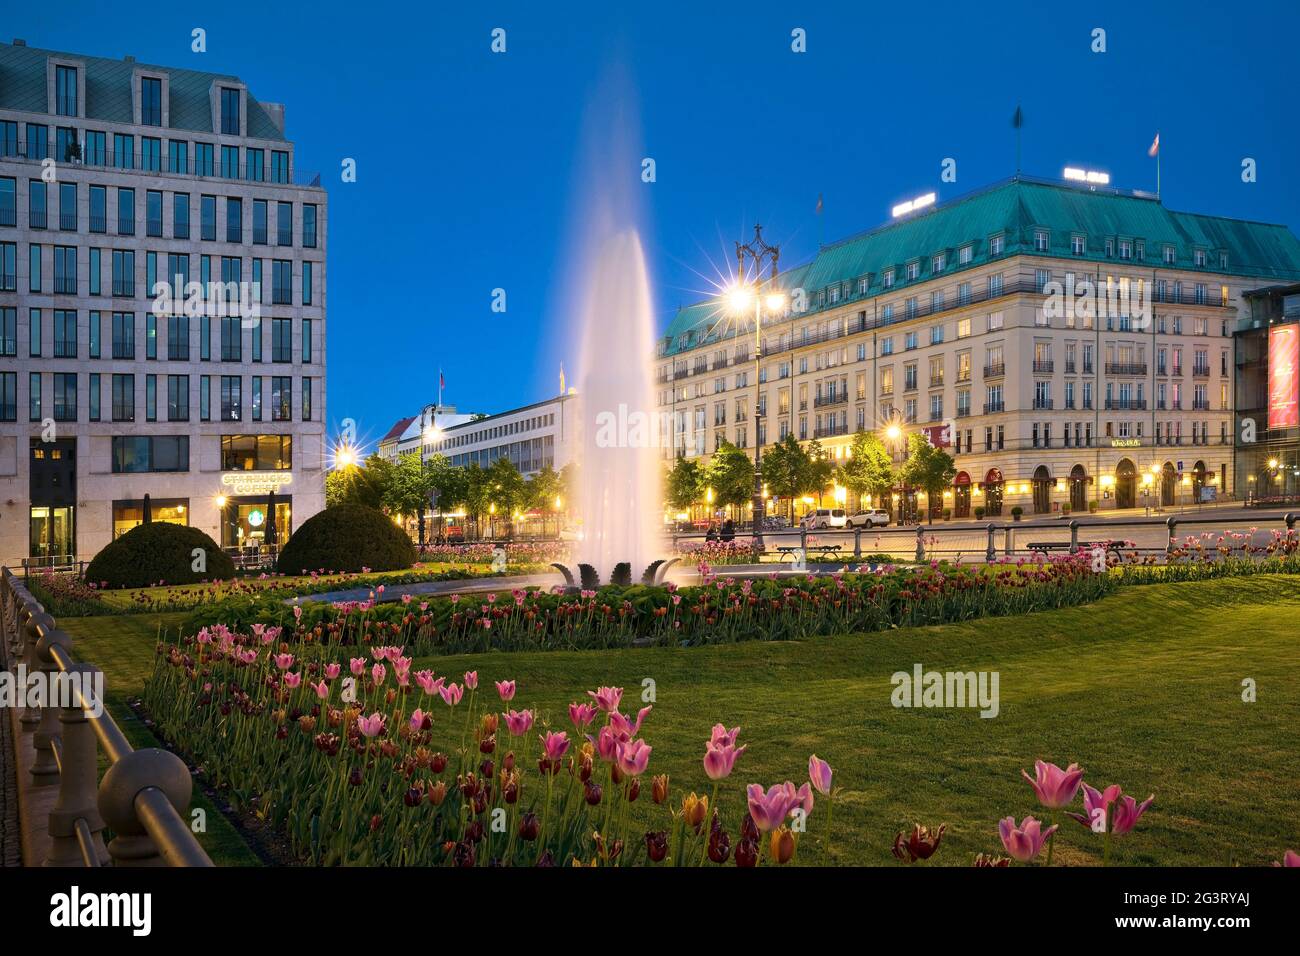 illuminated Pariser Platz (Paris Square) with fountain and Hotel Adlon Kempinski in the evening, Germany, Berlin Stock Photo